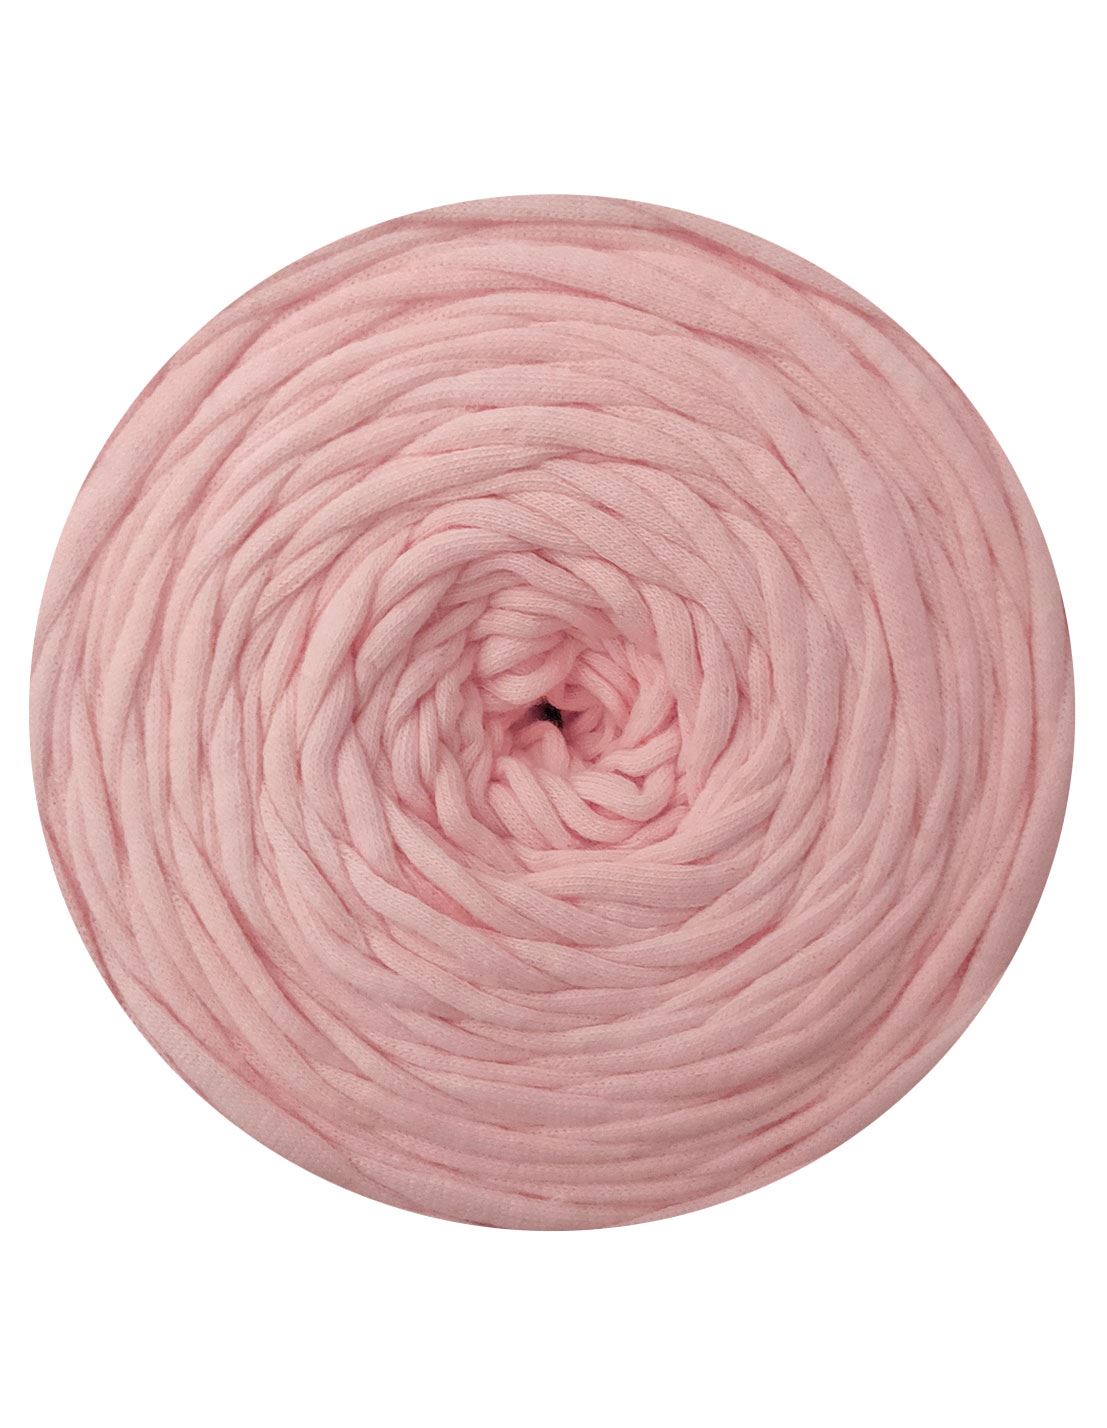 Pink t-shirt yarn (100-120m)